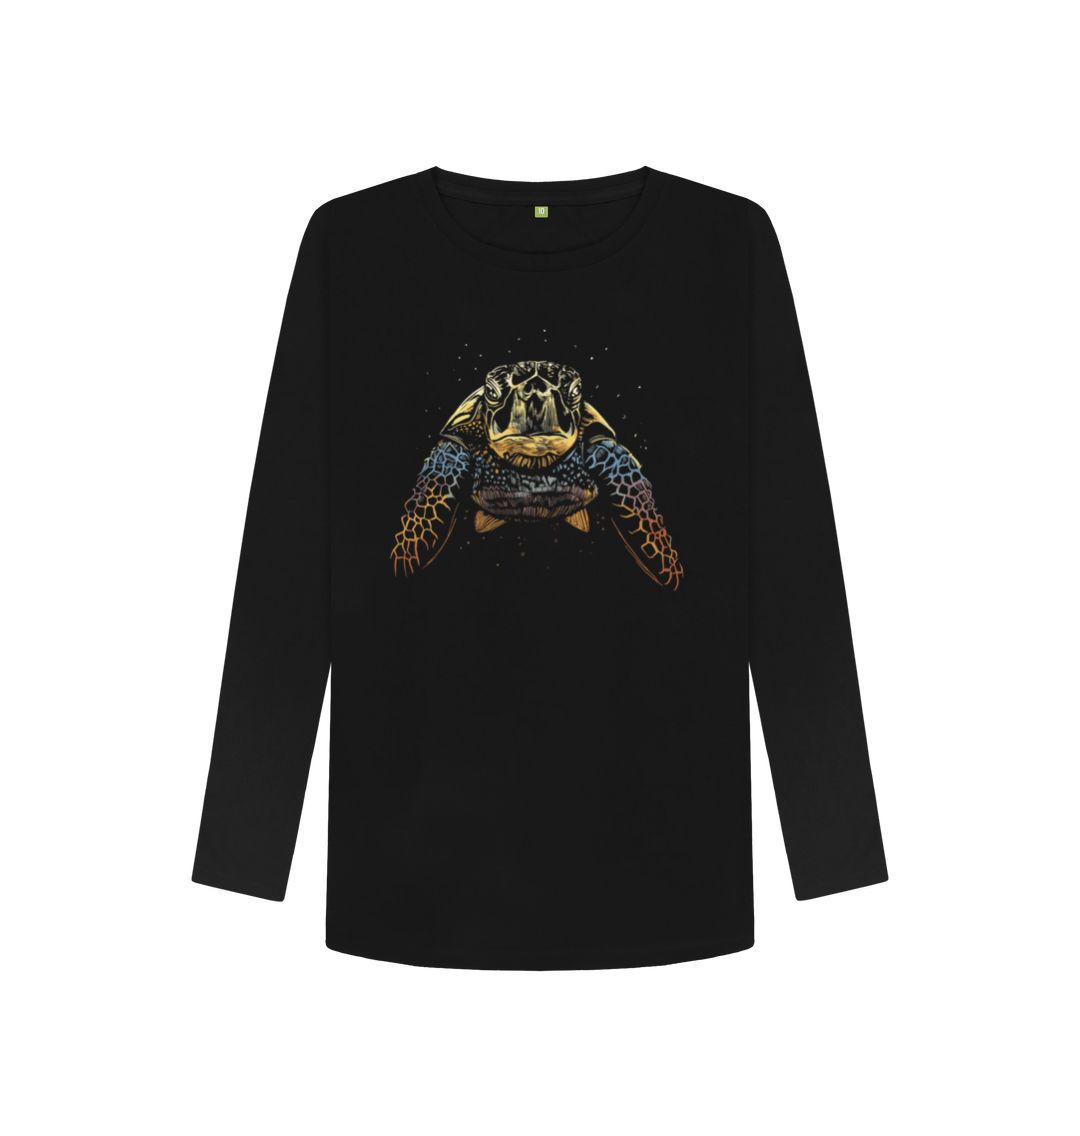 Black The Colour Turtle Women's Long Sleeve T-Shirt